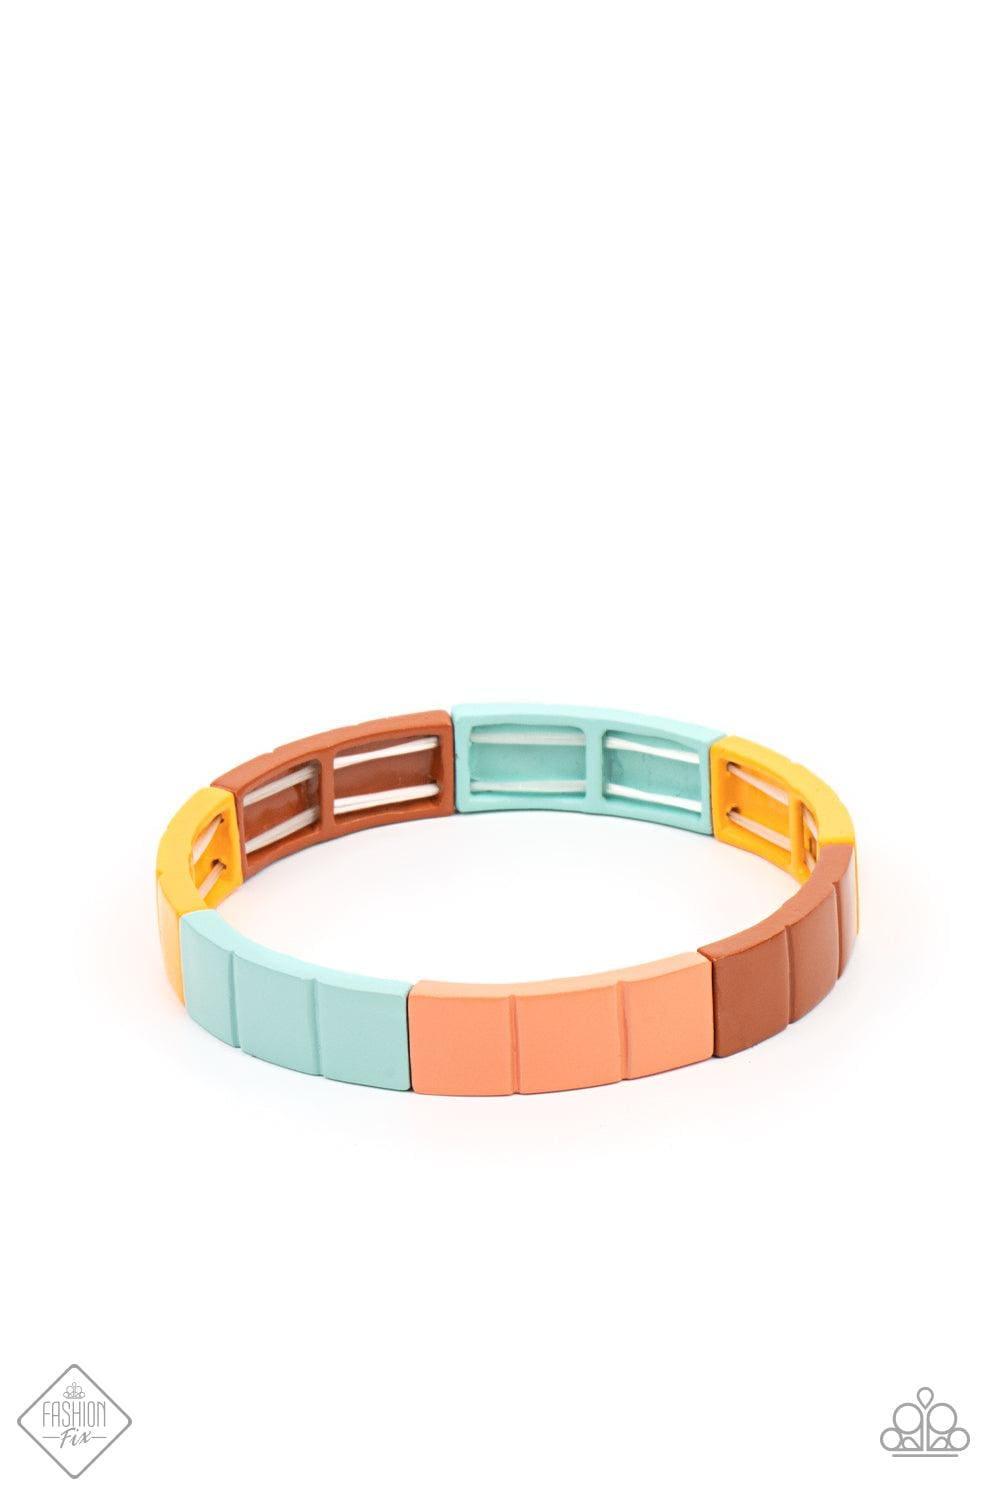 Paparazzi Accessories - Material Movement - Multicolor Bracelet - Bling by JessieK